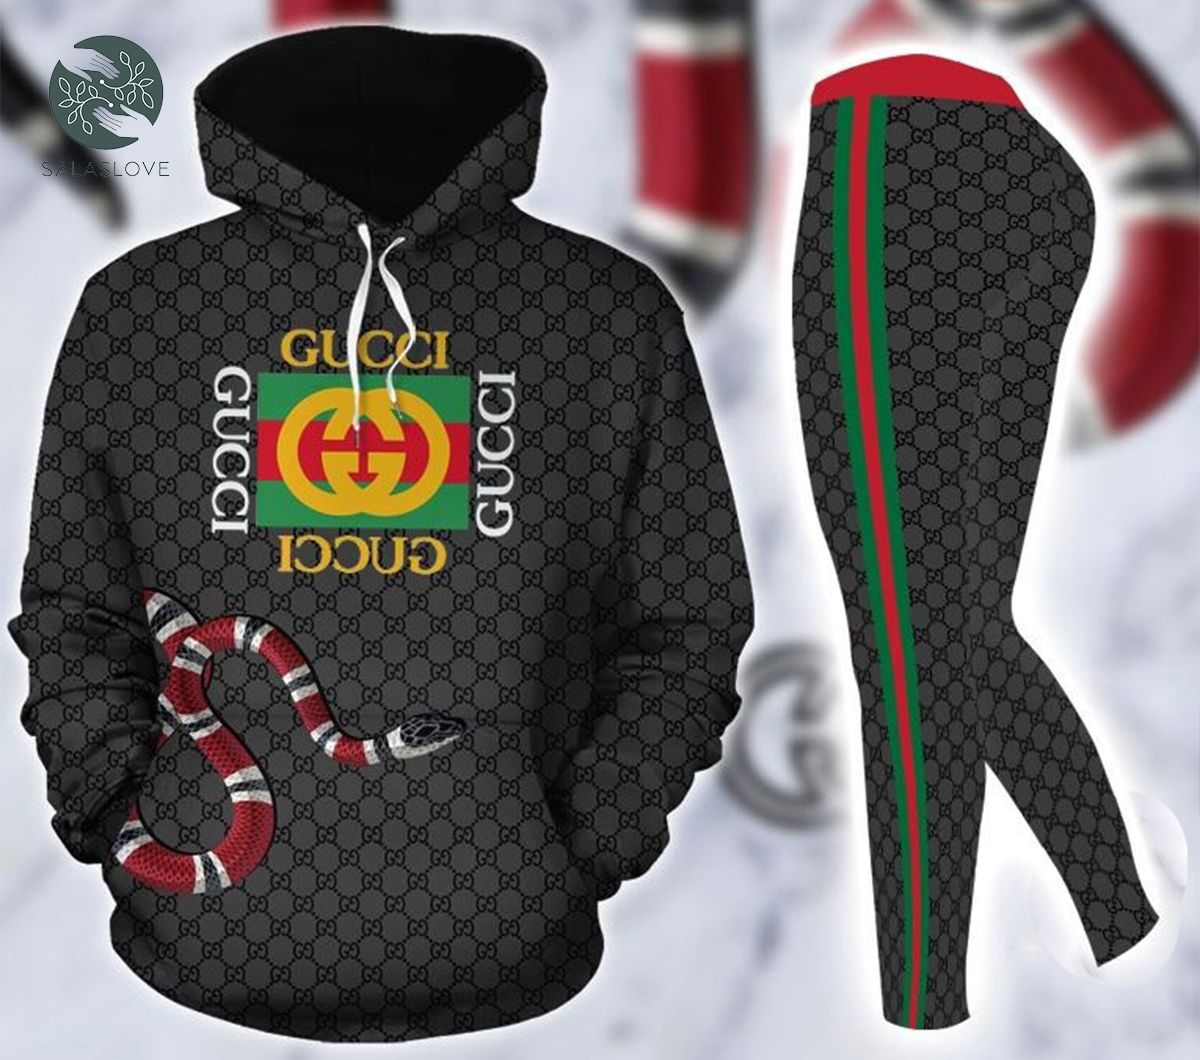 King snake gucci 3d full print hoodie and leggings set